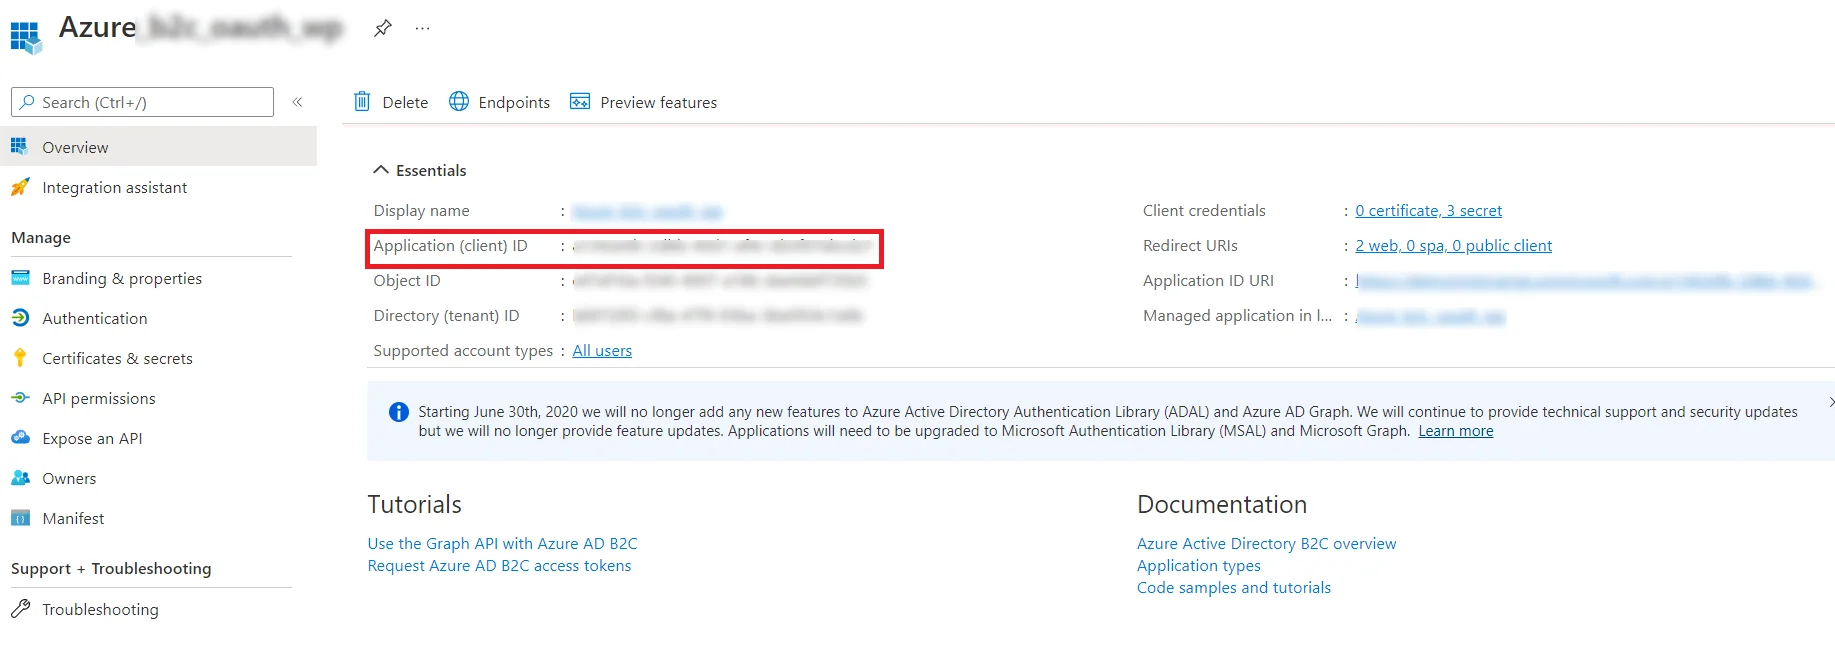 Umbraco OAuth/OIDC Single Sign-On (SSO) using AzureAD B2C as IDP (OAuth Provider) - Application ID